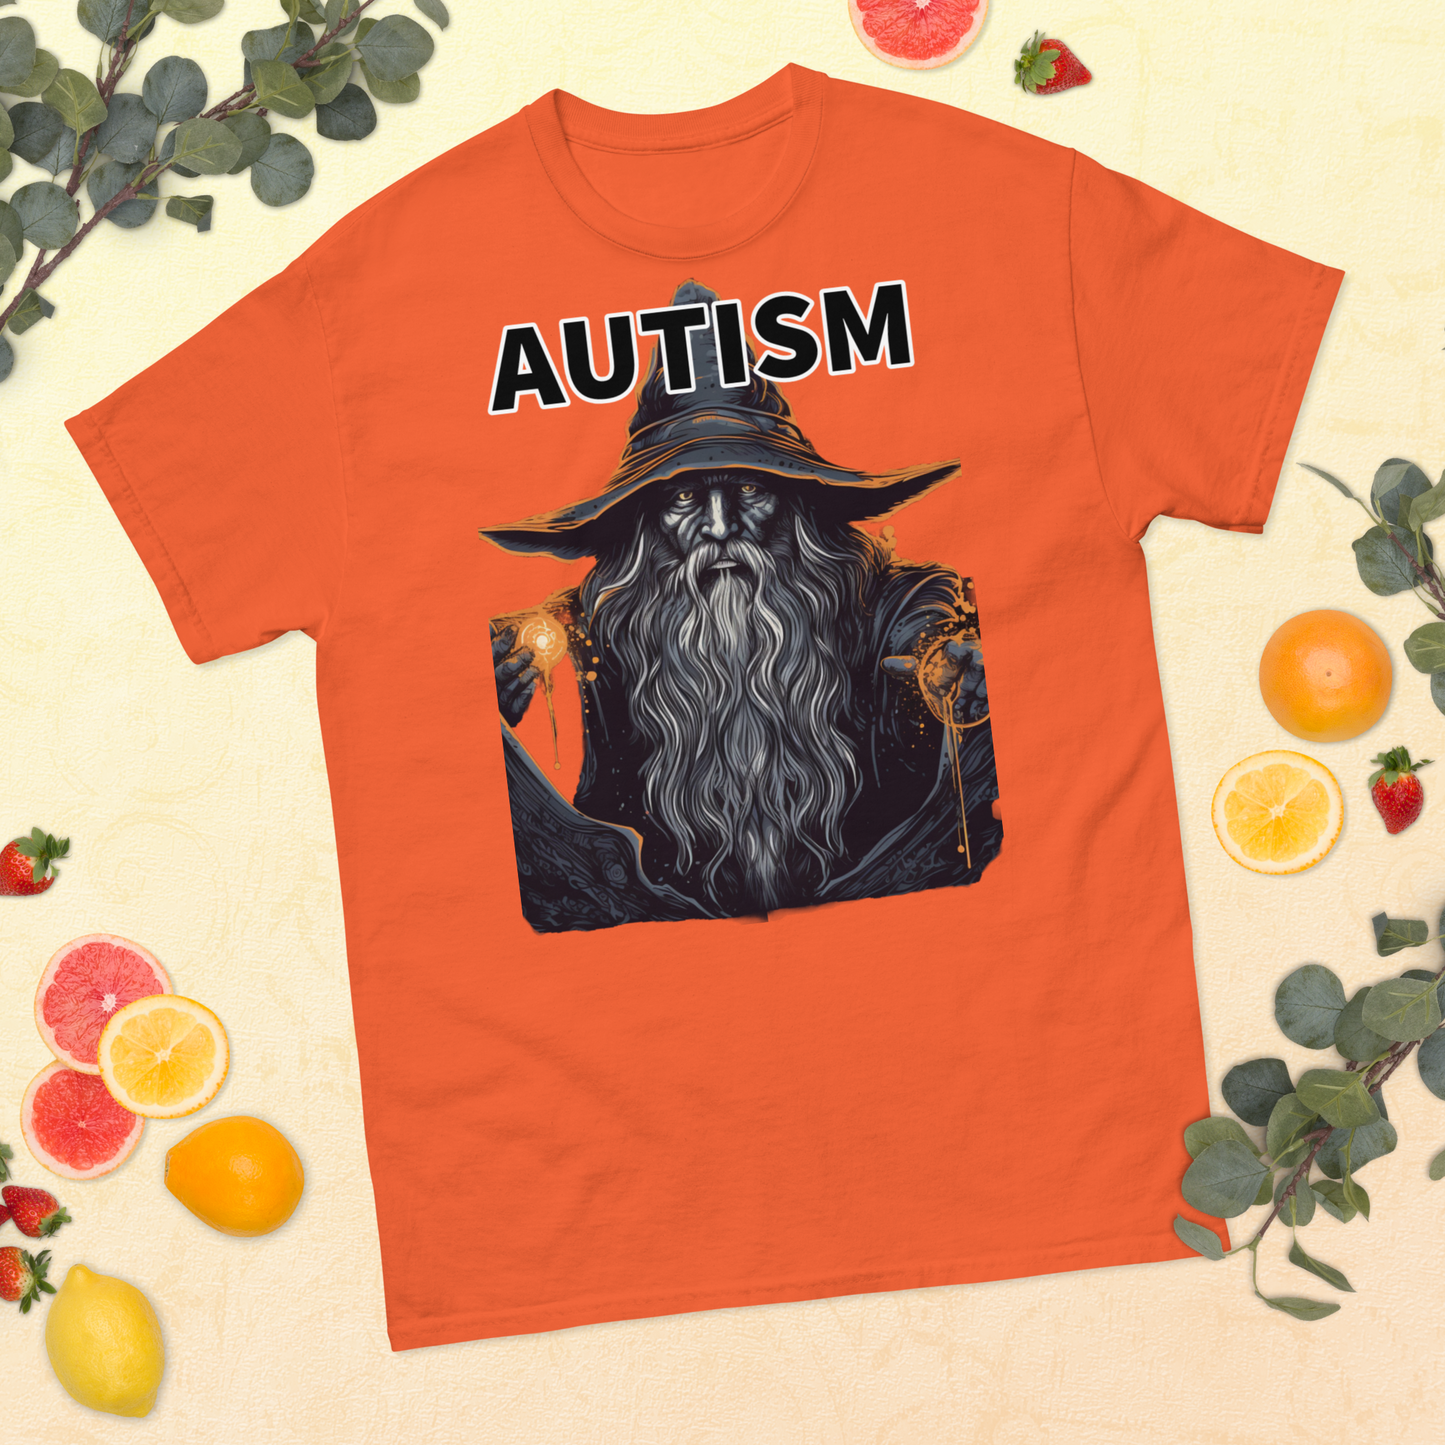 Enchantaut Spectrum Tee: Embrace the Magical Brilliance of Wizard Autism!